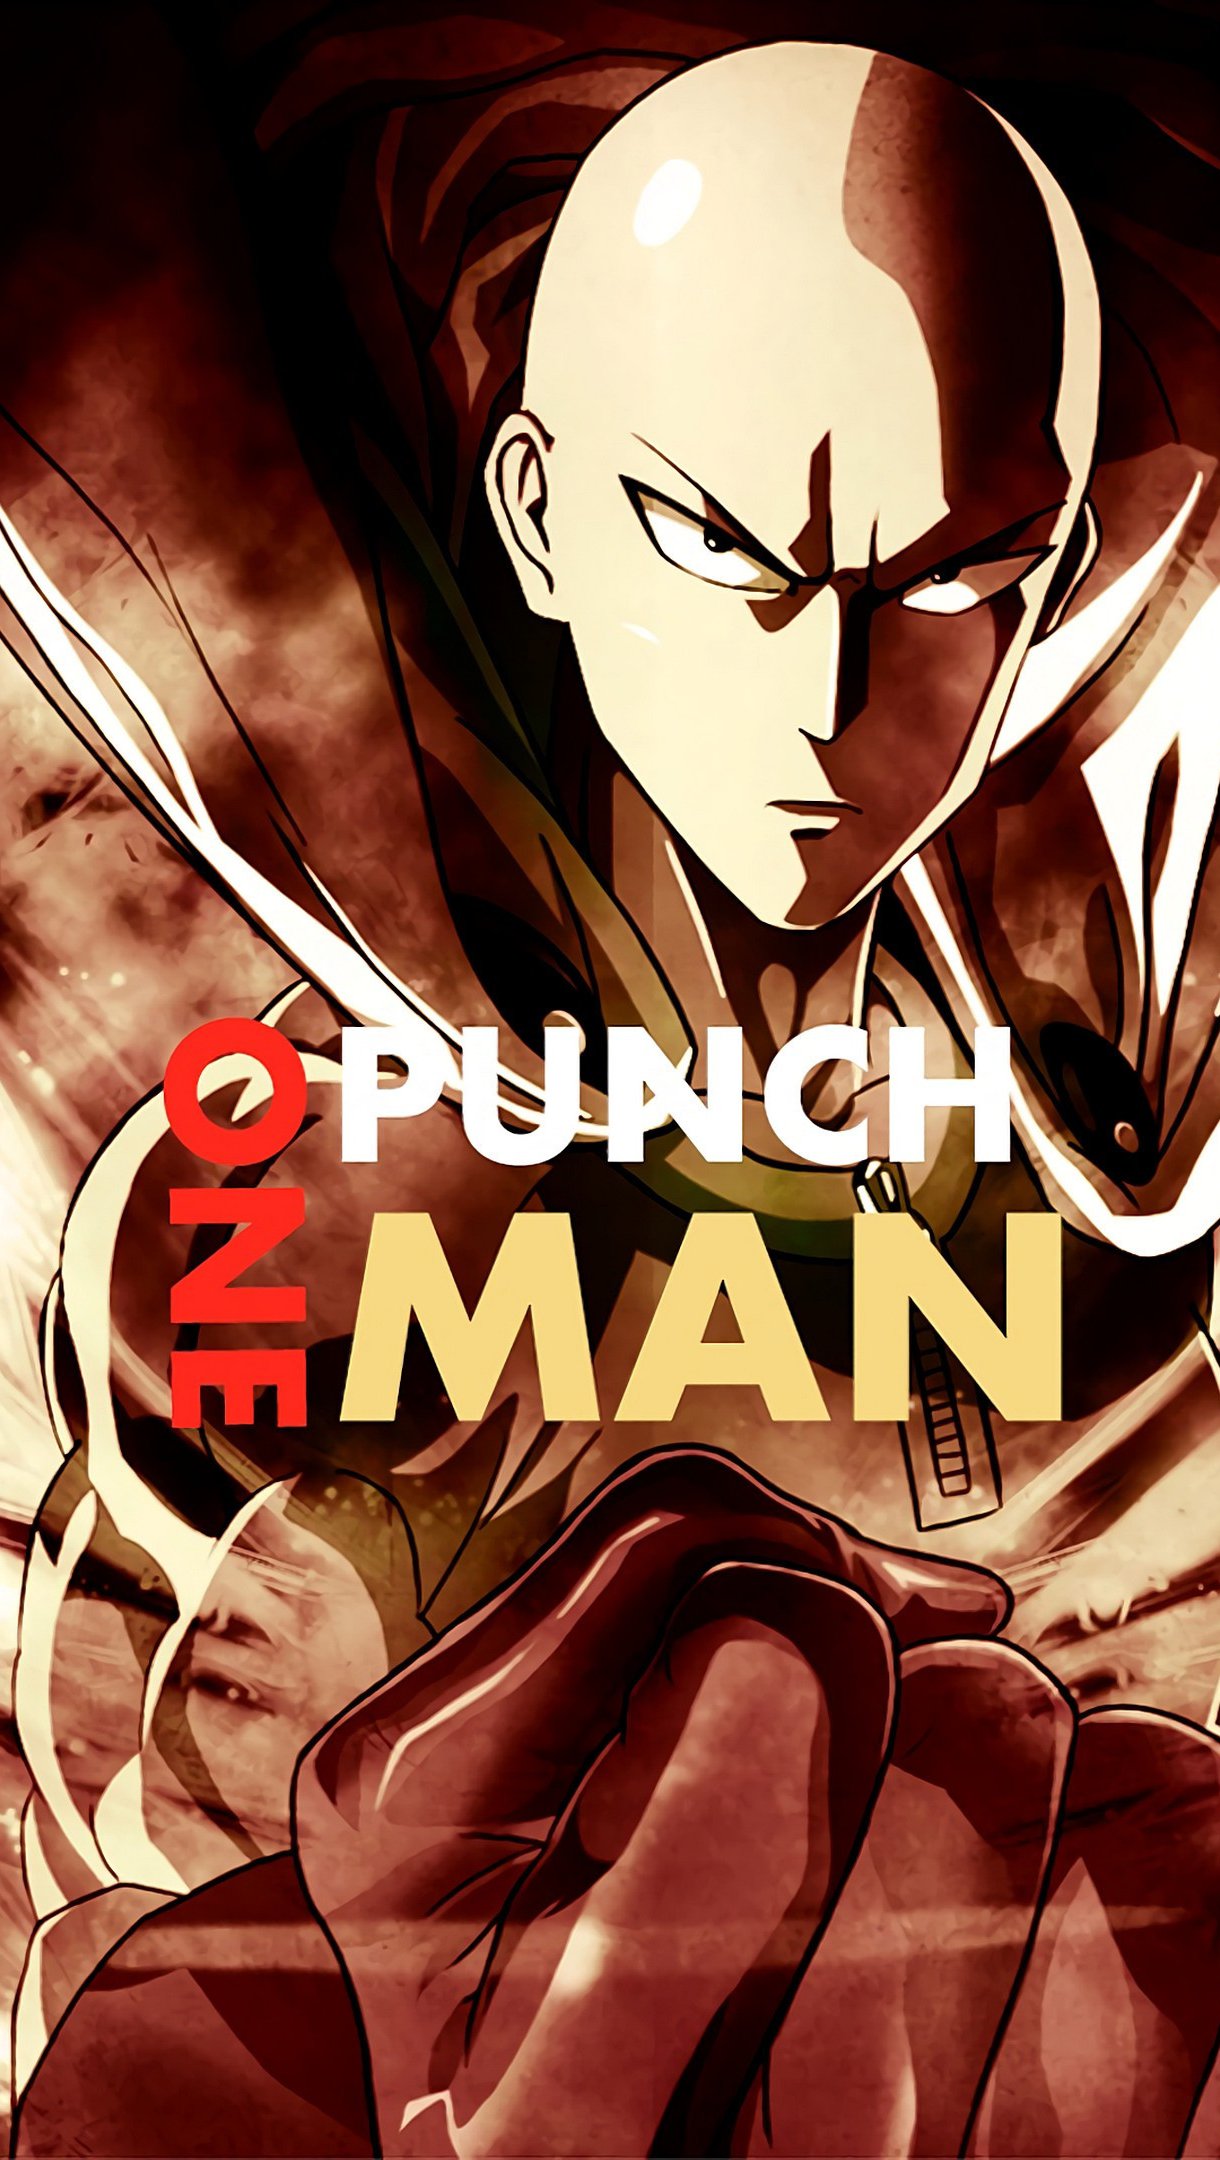 Saitama One-Punch Man Wallpapers